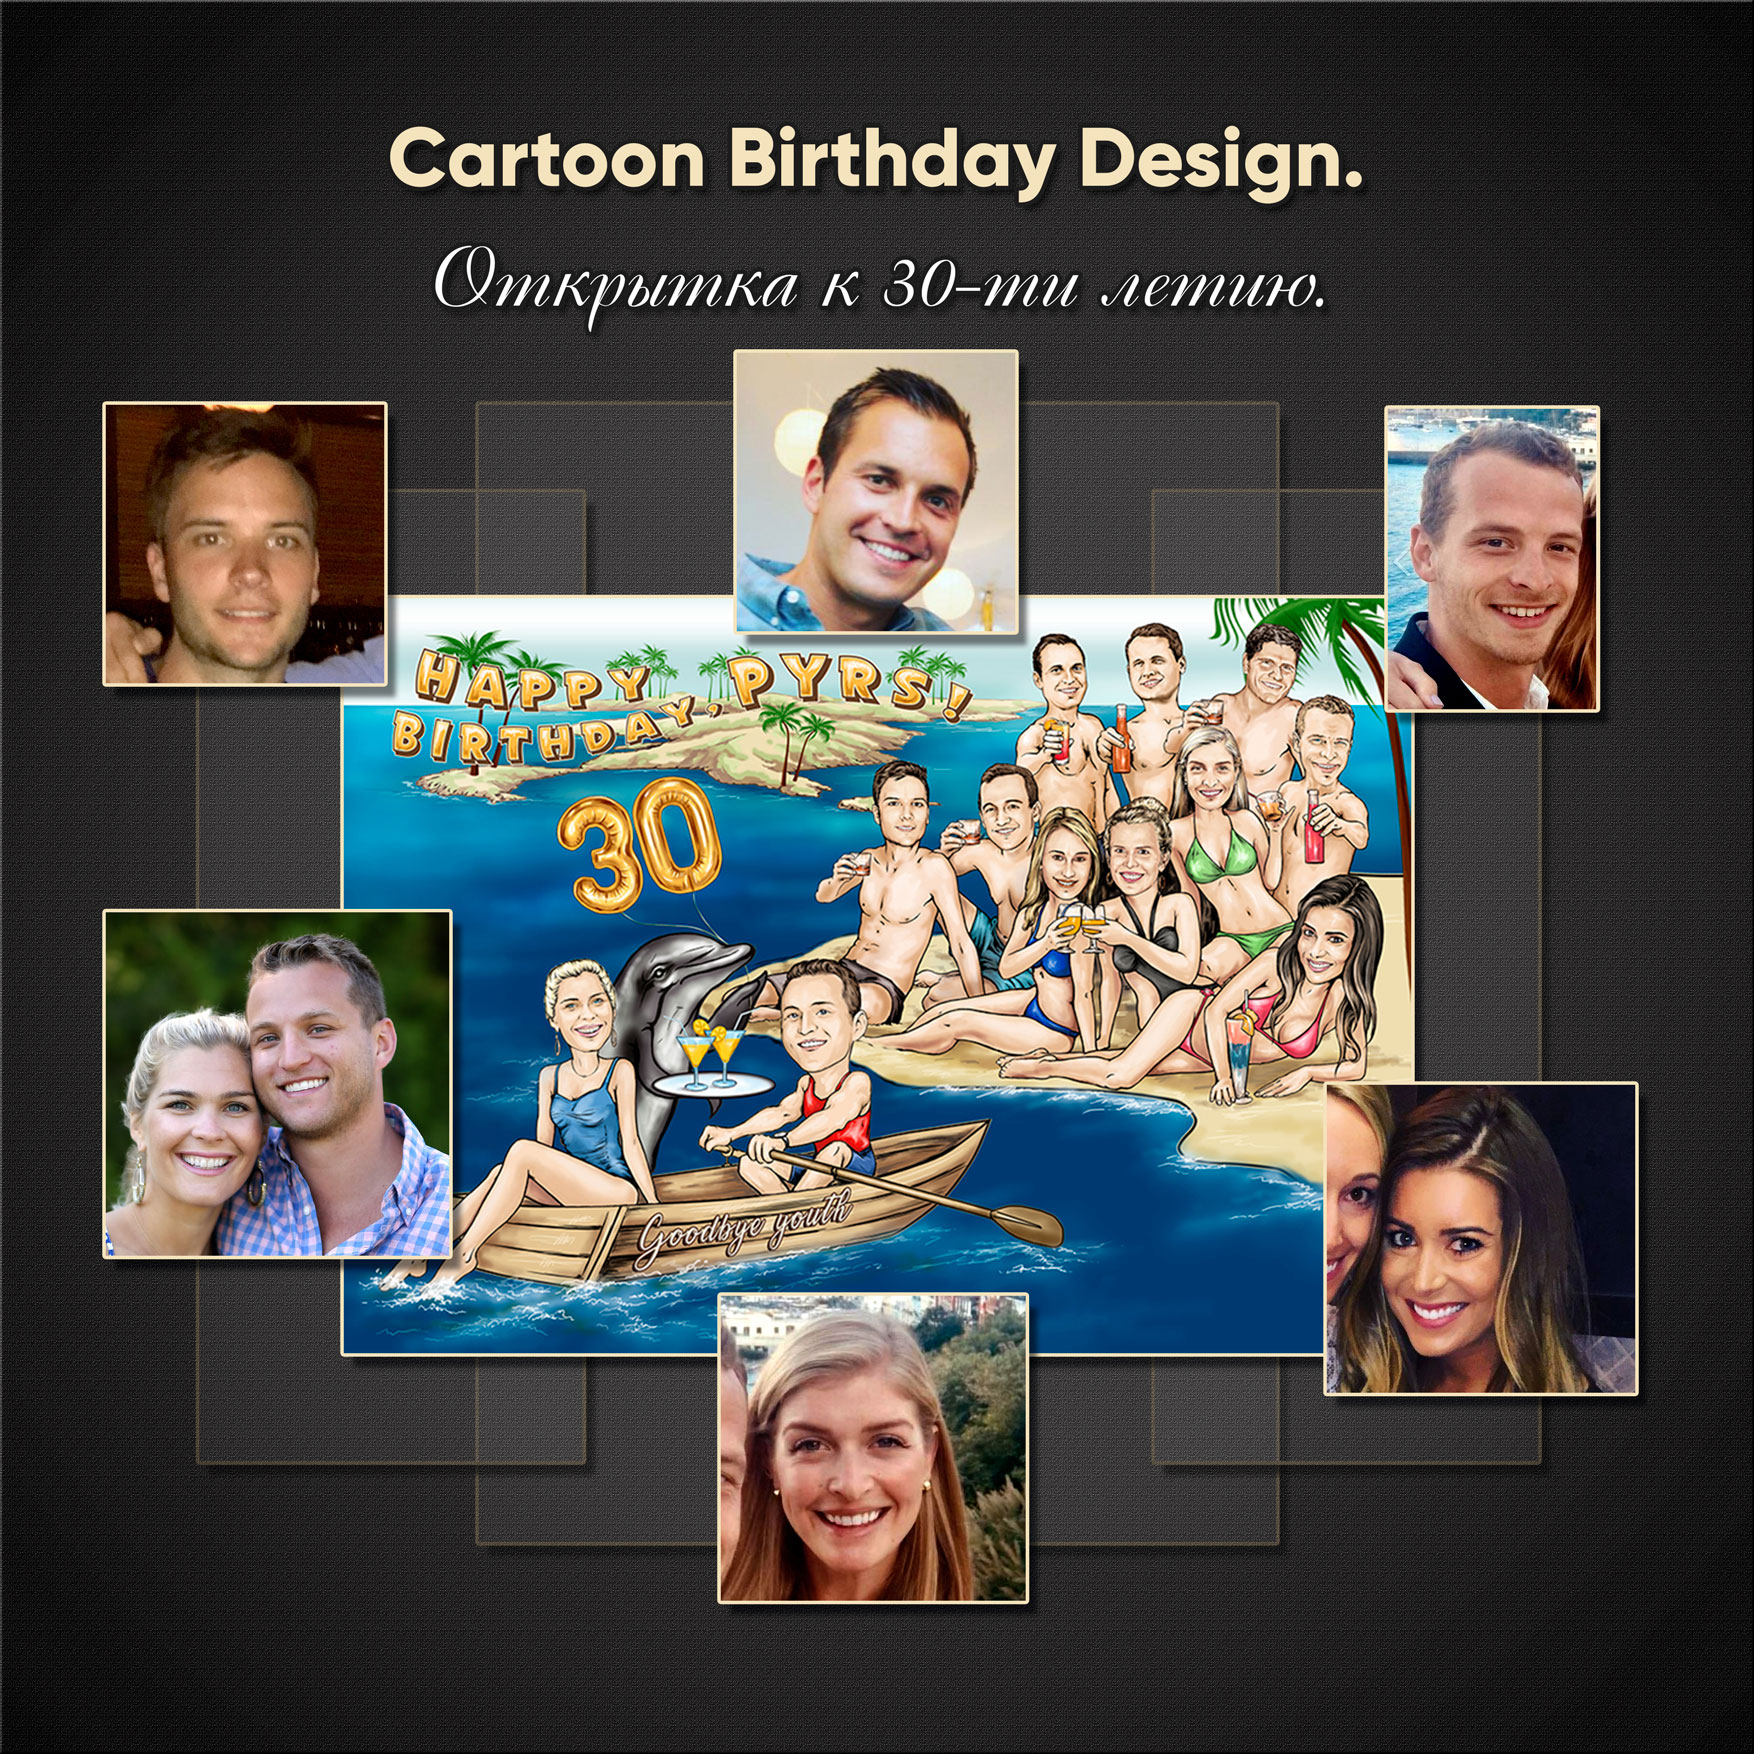 Cartoon birthday design web